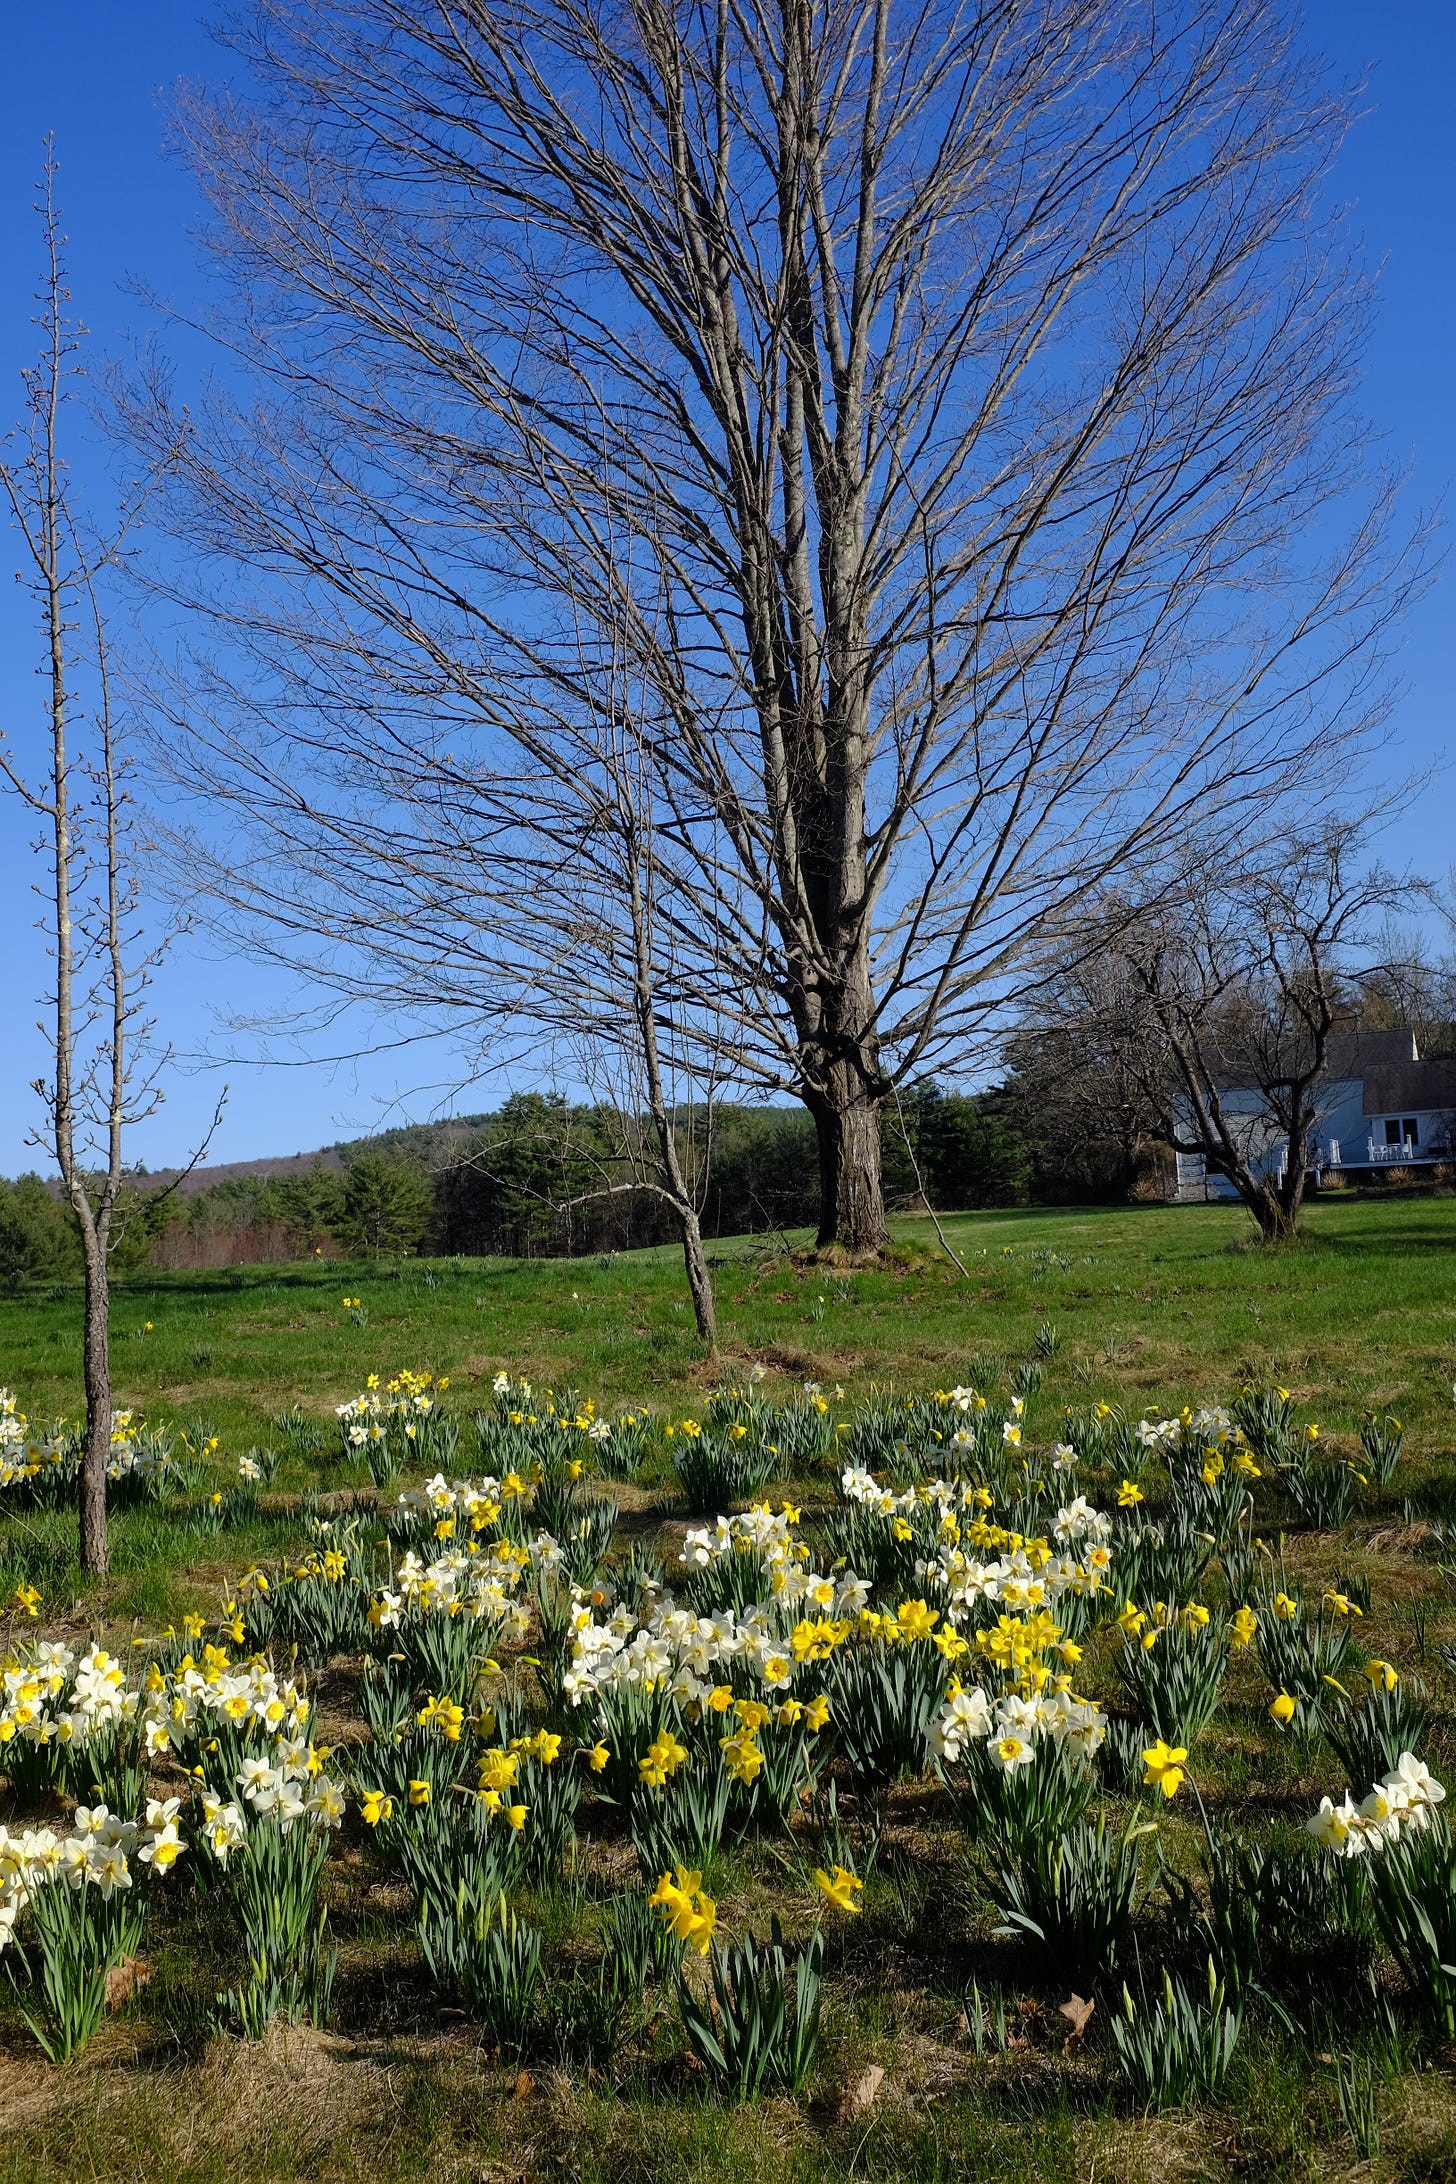 daffodils and a big bare tree